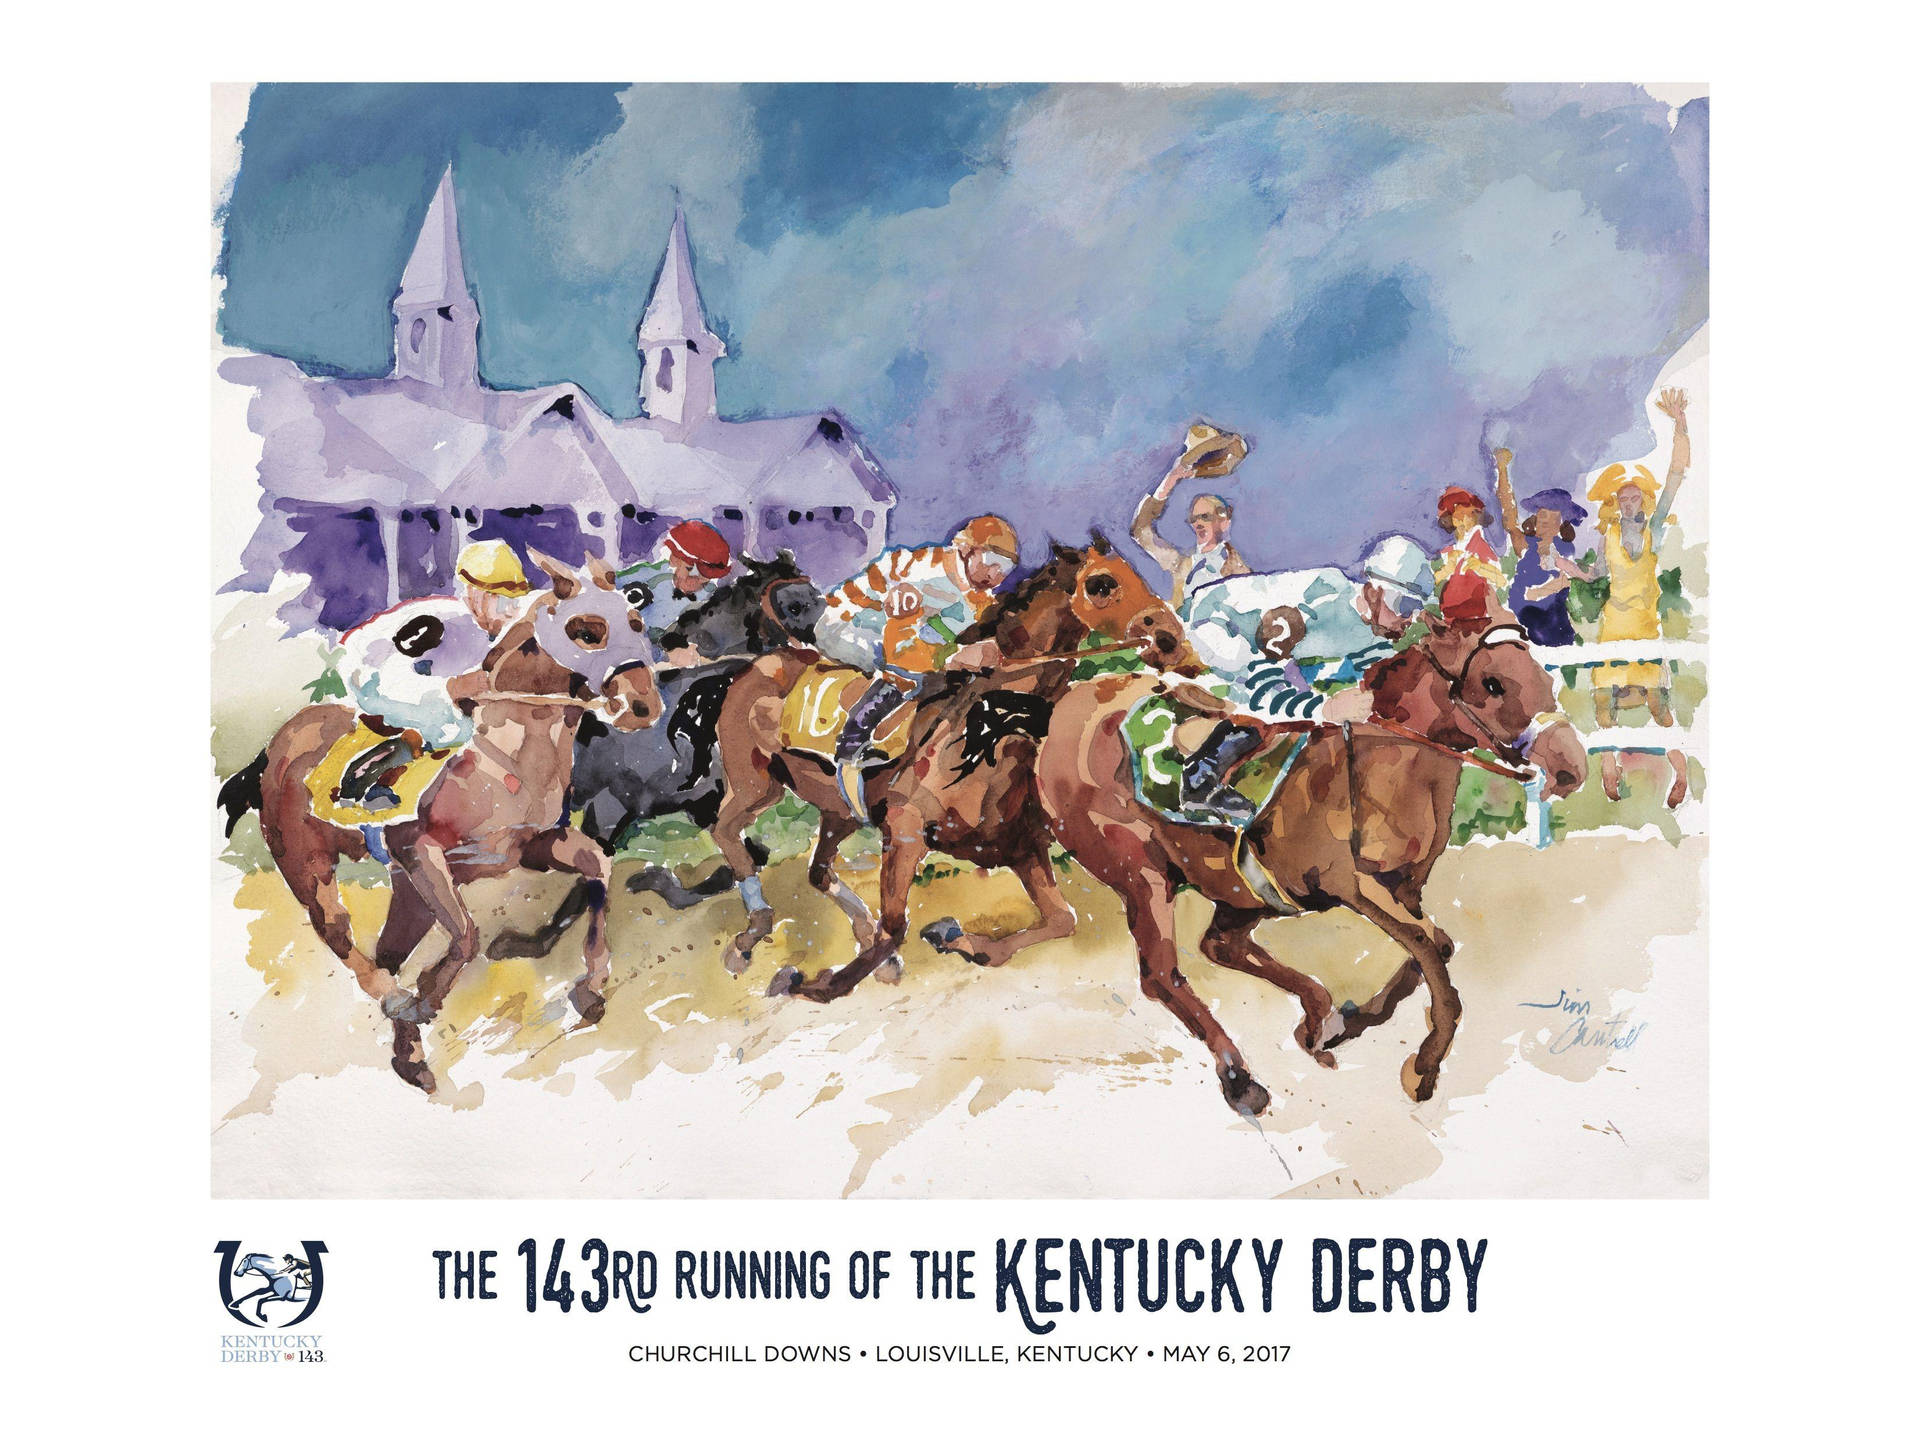 Kentucky Derby Poster Artwork Background